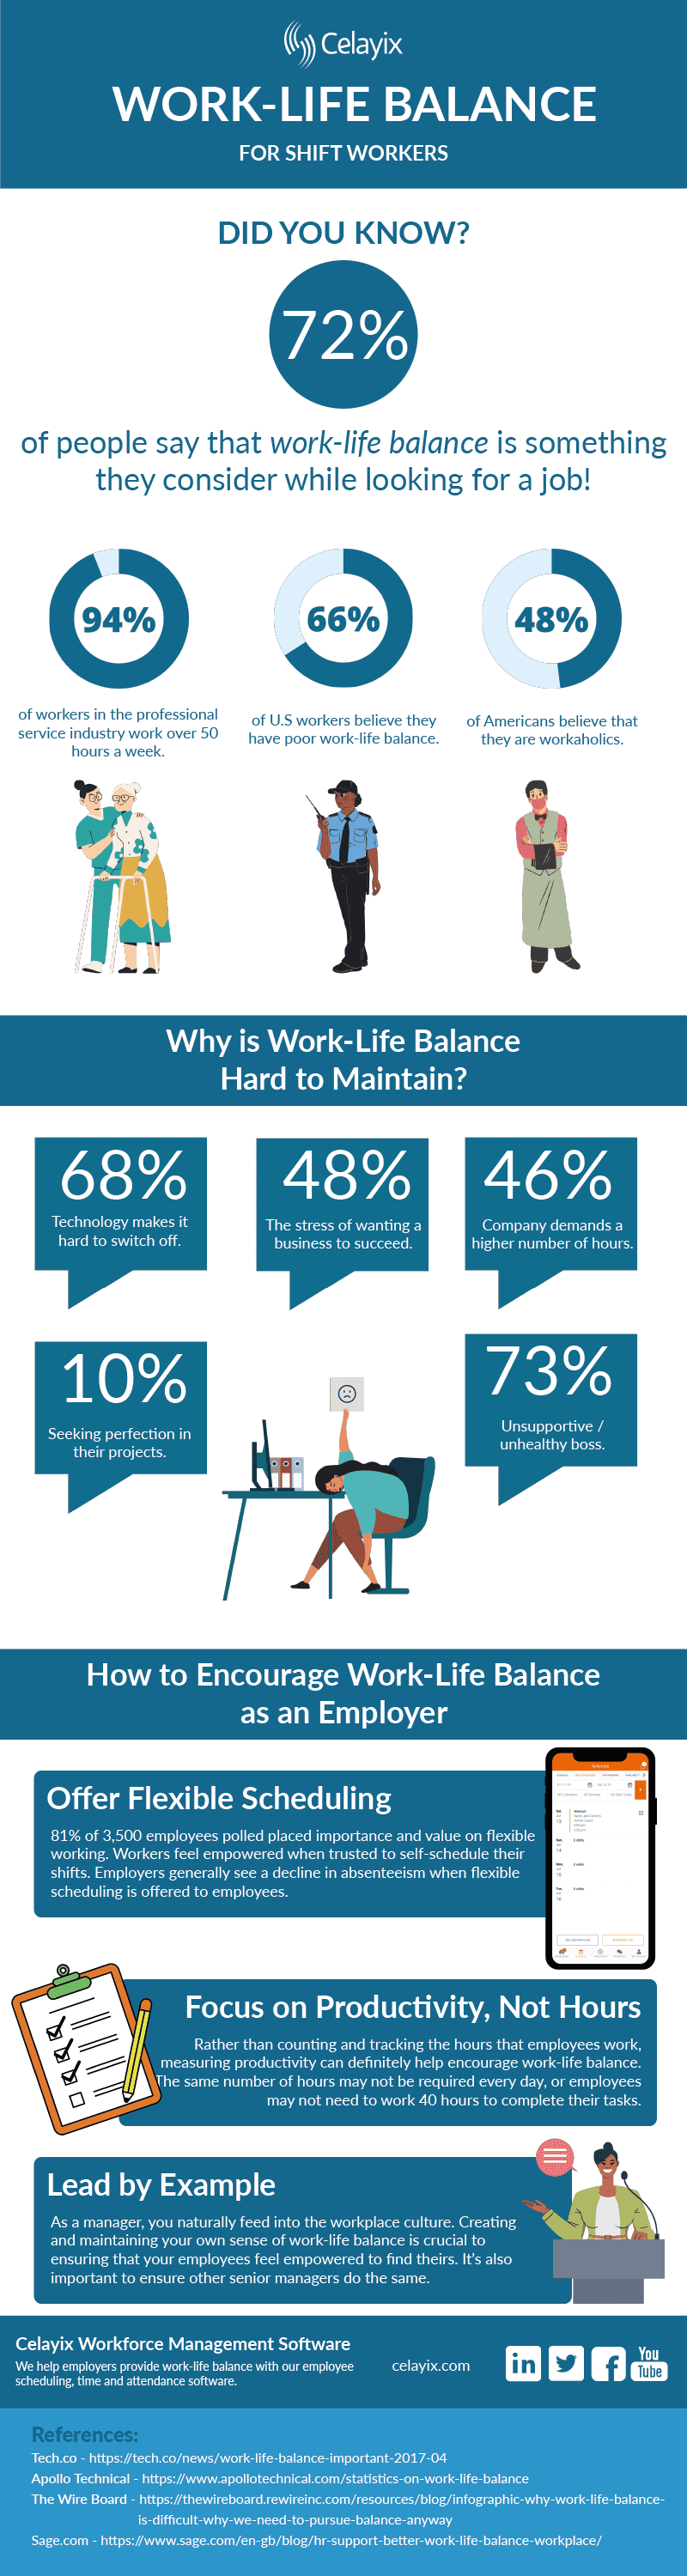 work-life balance infographic